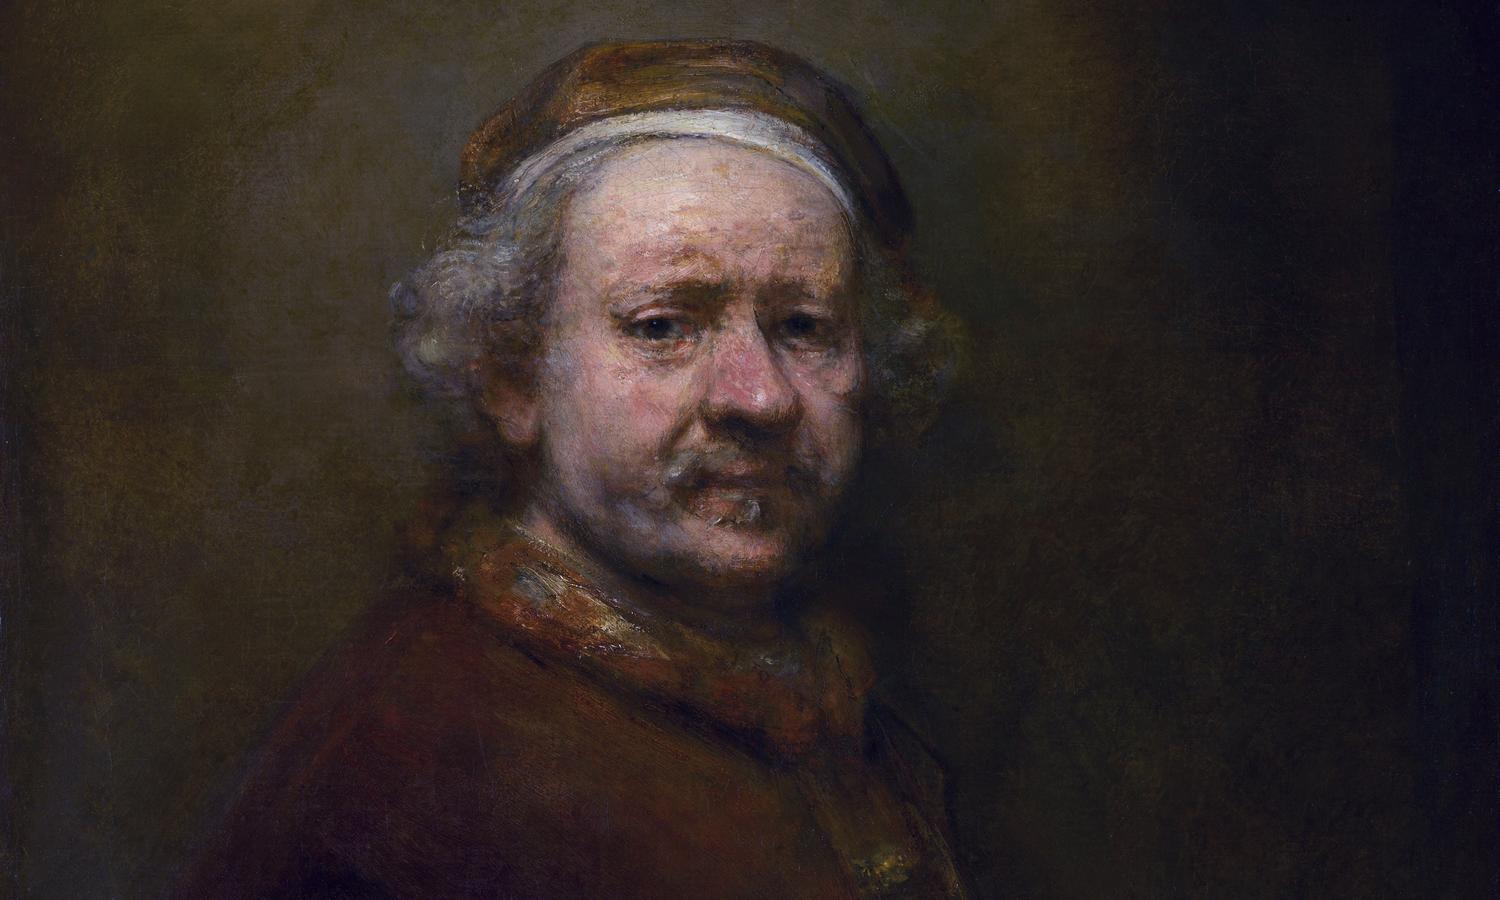 Rembrandt studios frenc lick in